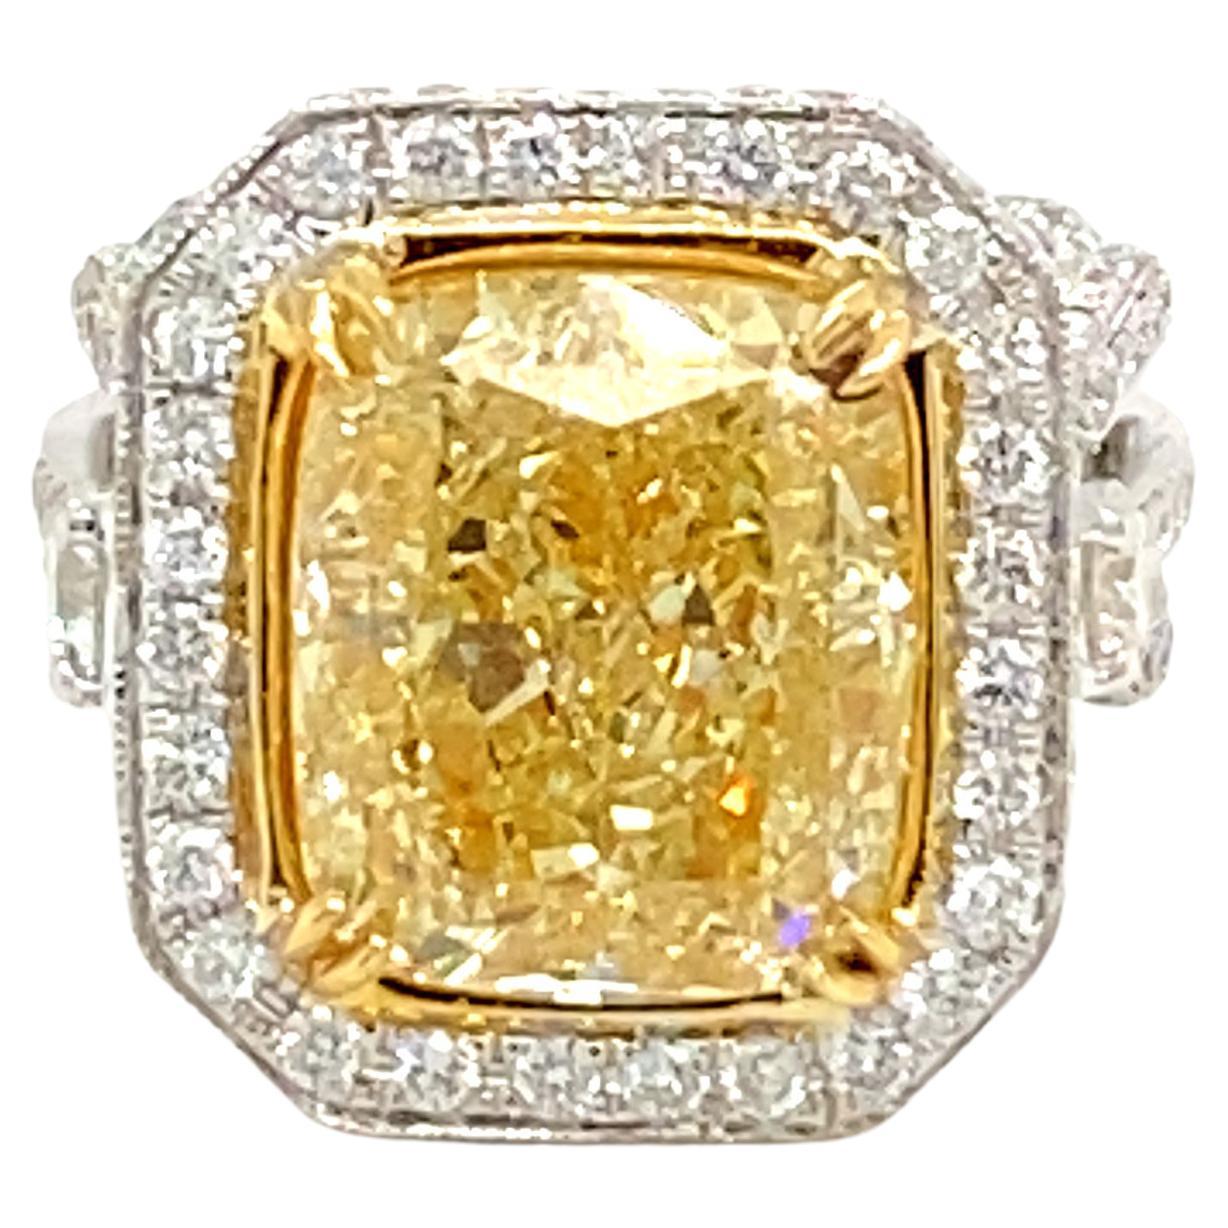 10.12 Carat Canary Diamond Ring